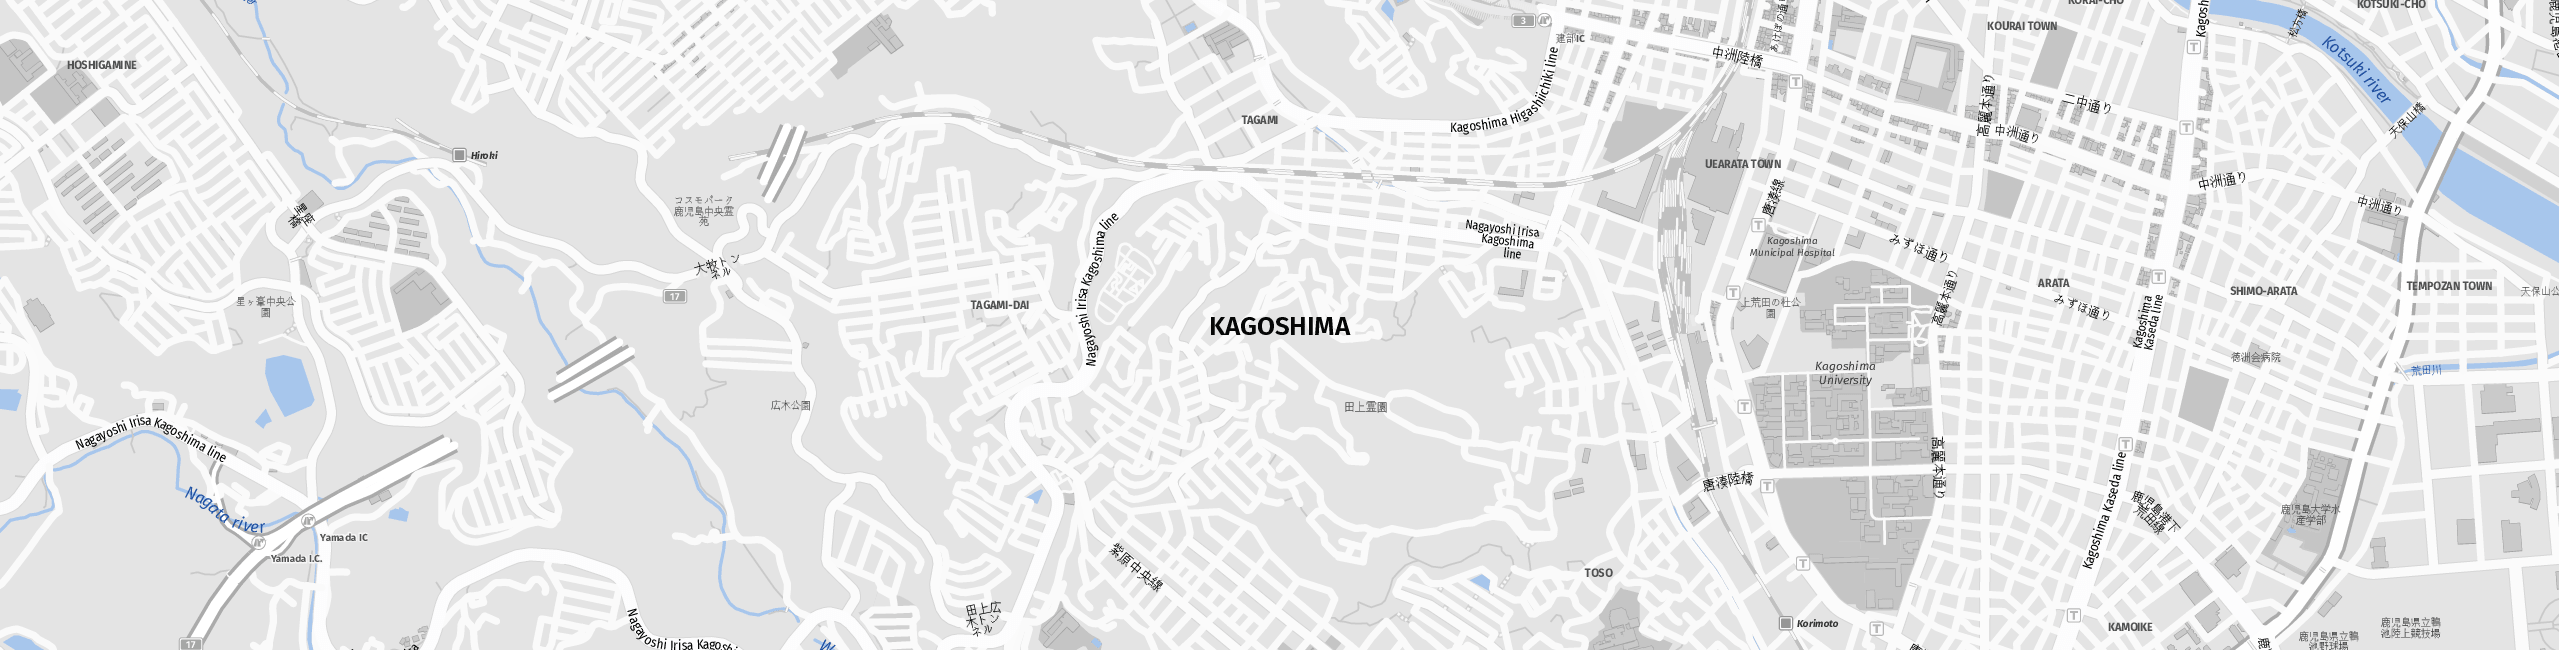 Stadtplan Kagoshima zum Downloaden.